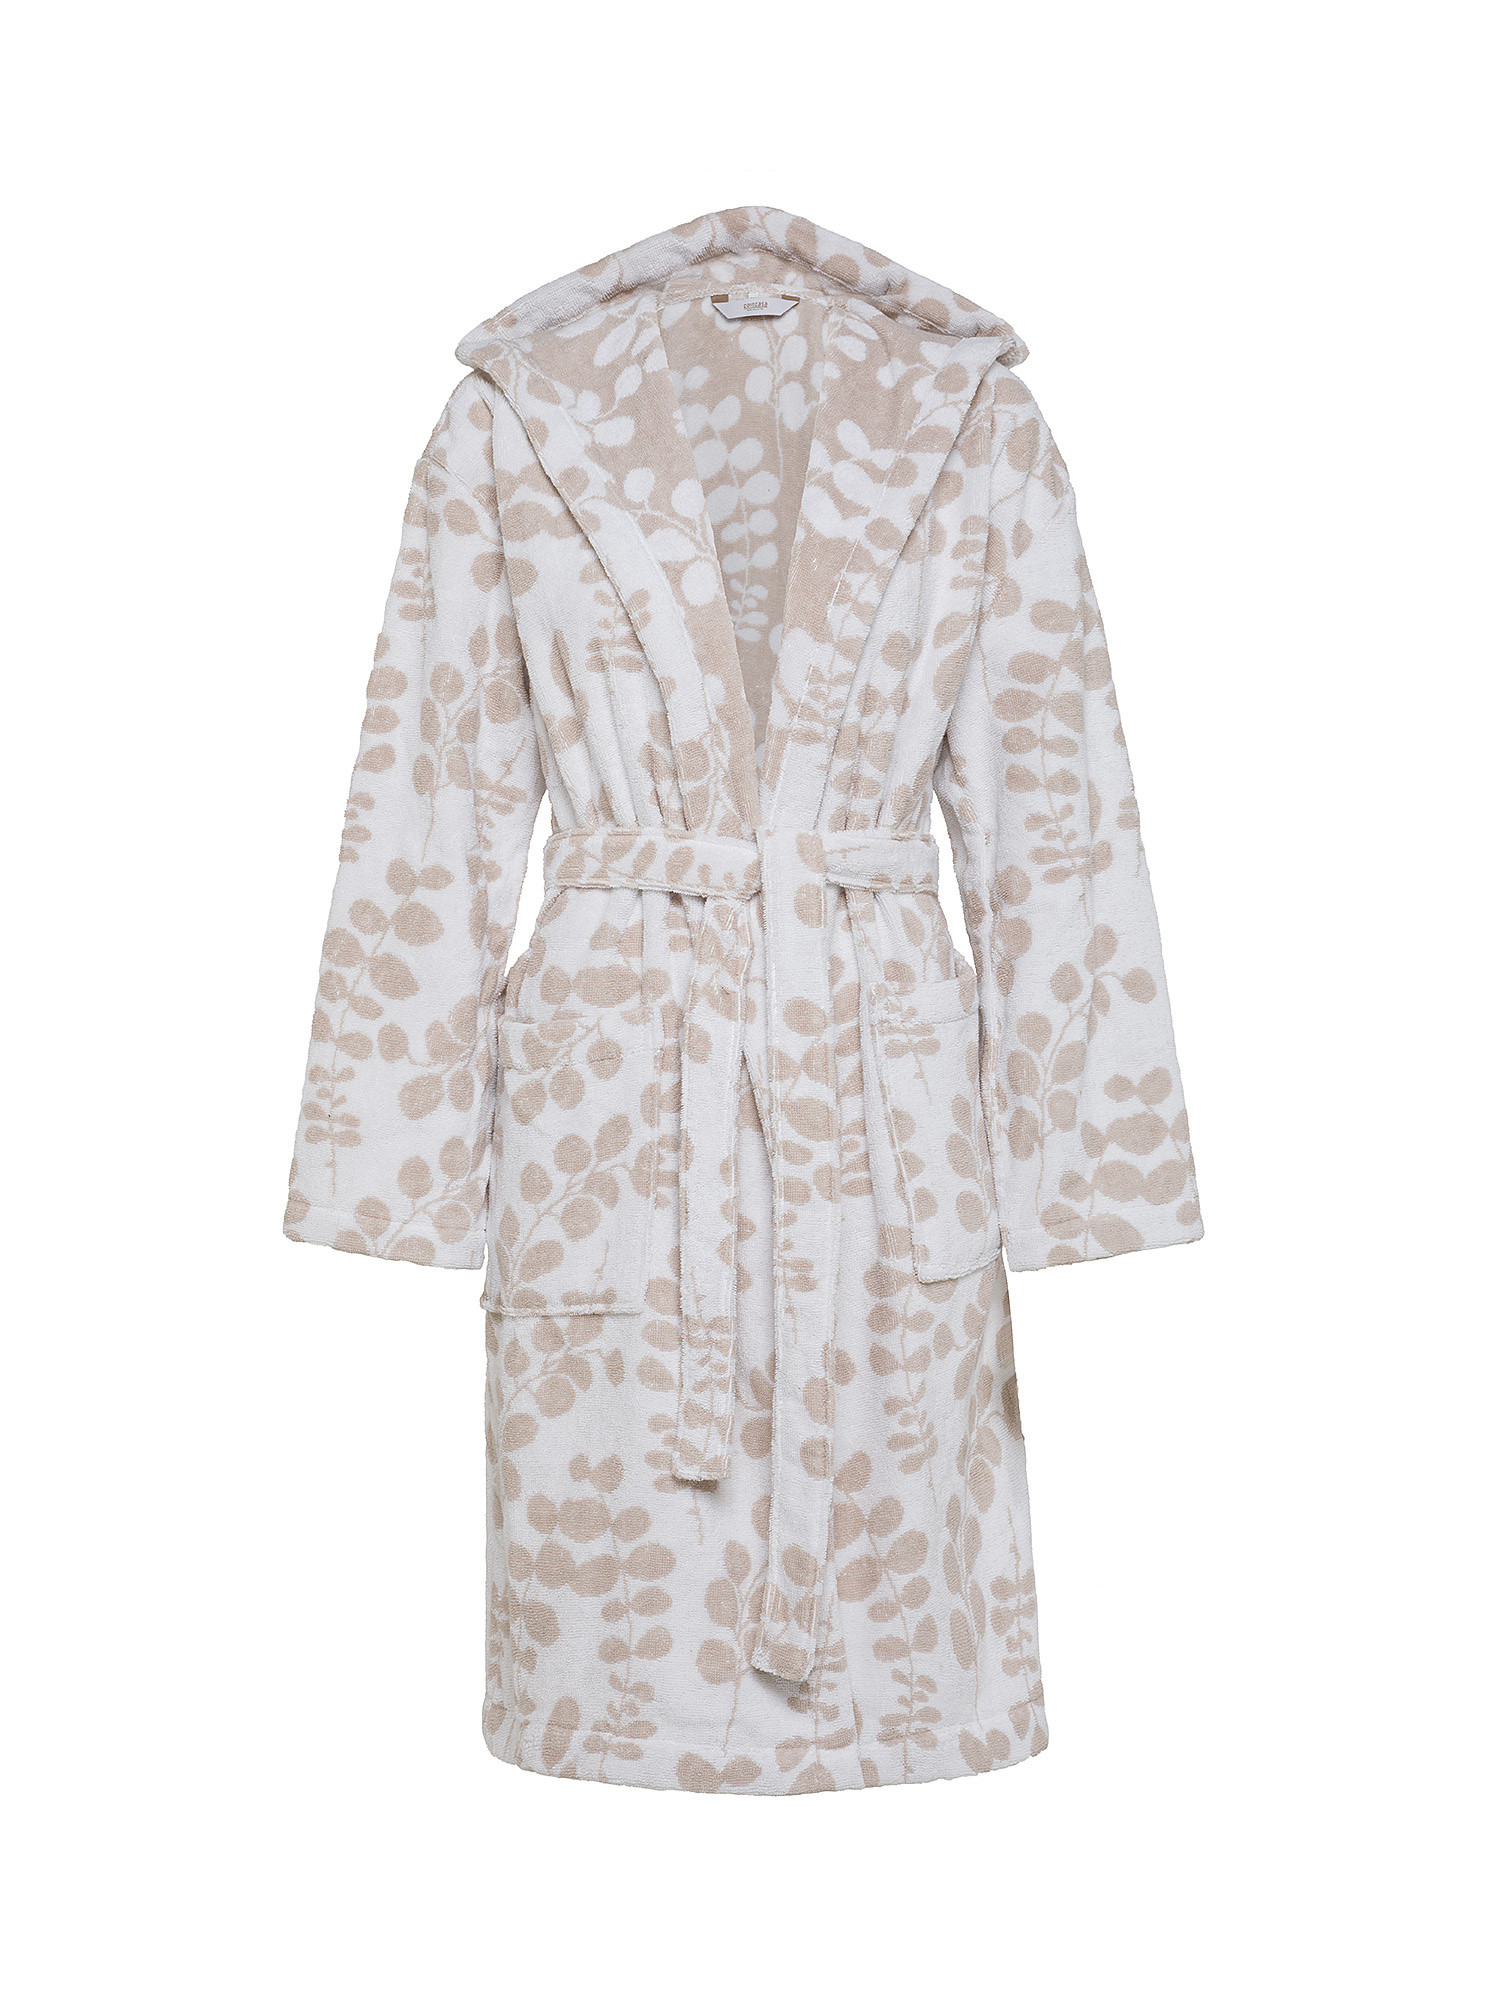 Foliage motif cotton terry bathrobe, Beige, large image number 0